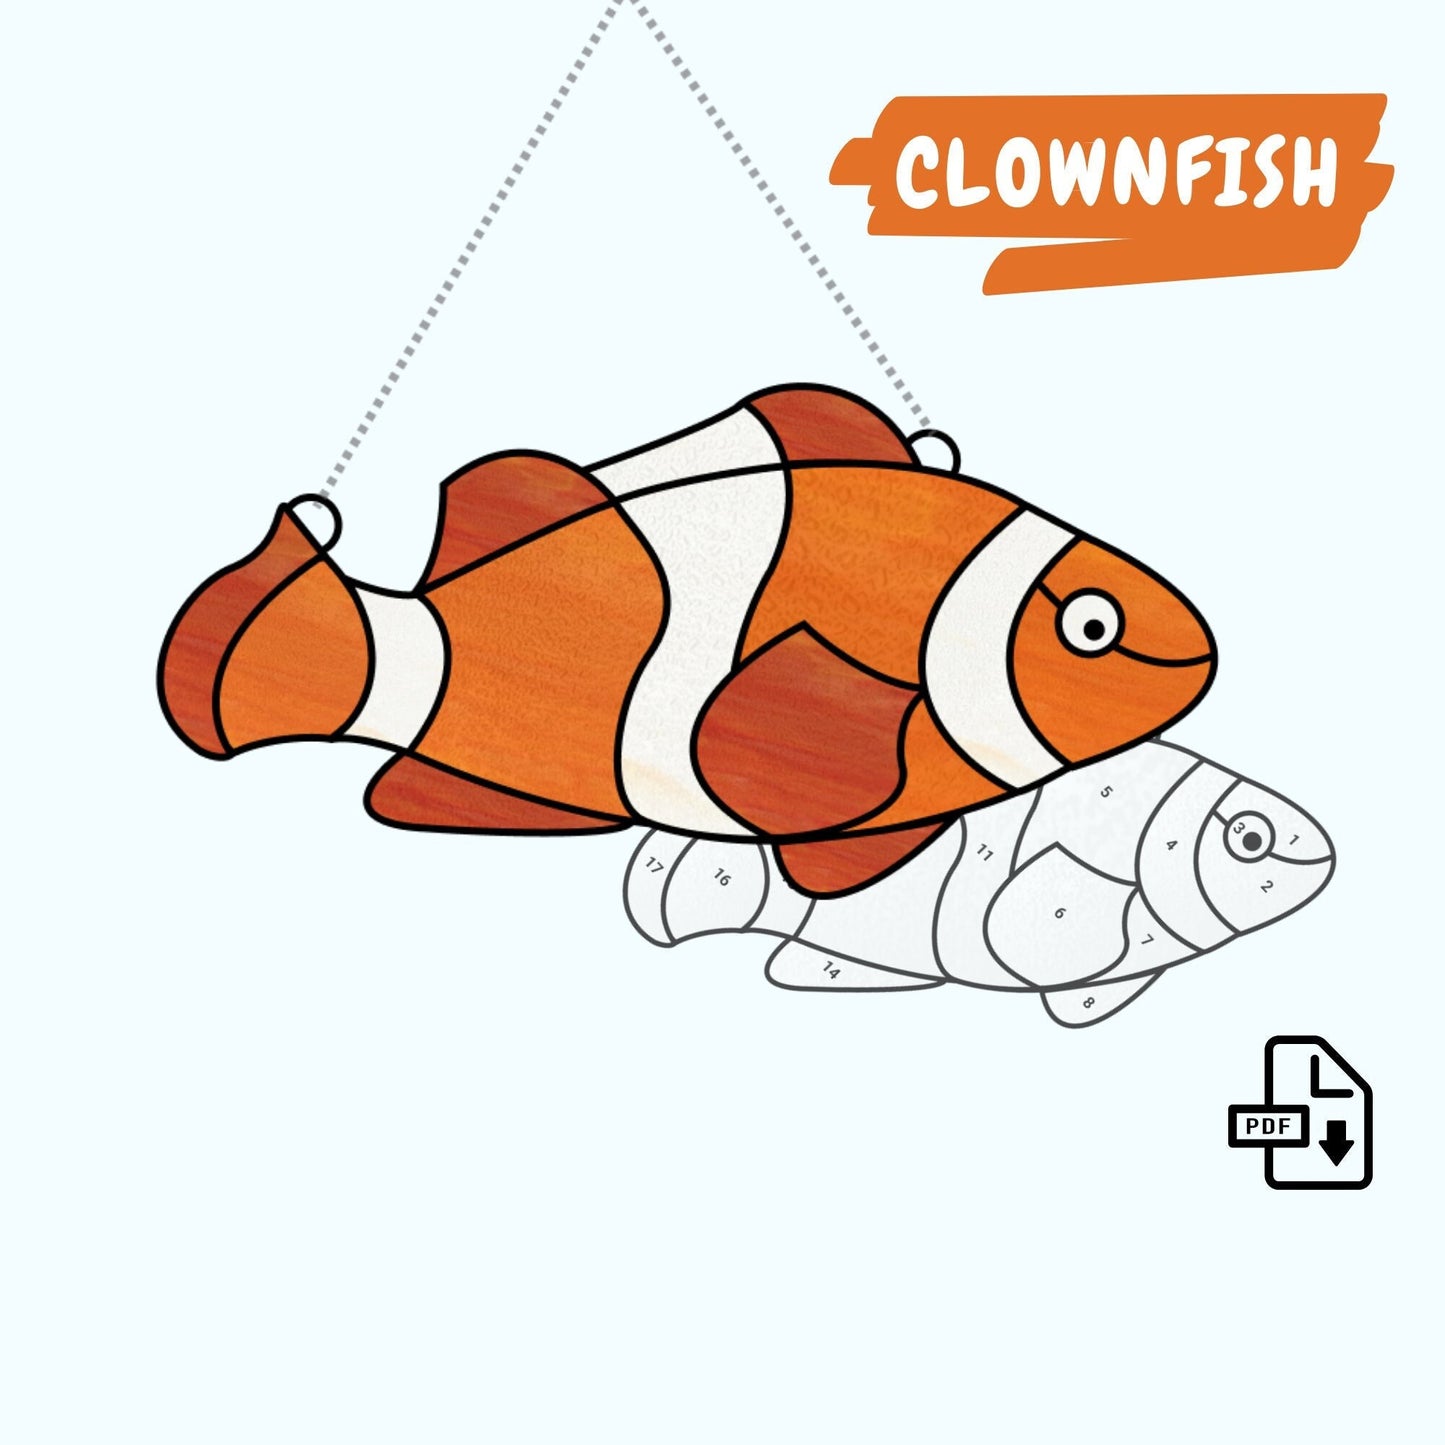 Clownfish nemo stained glass window hanging â s